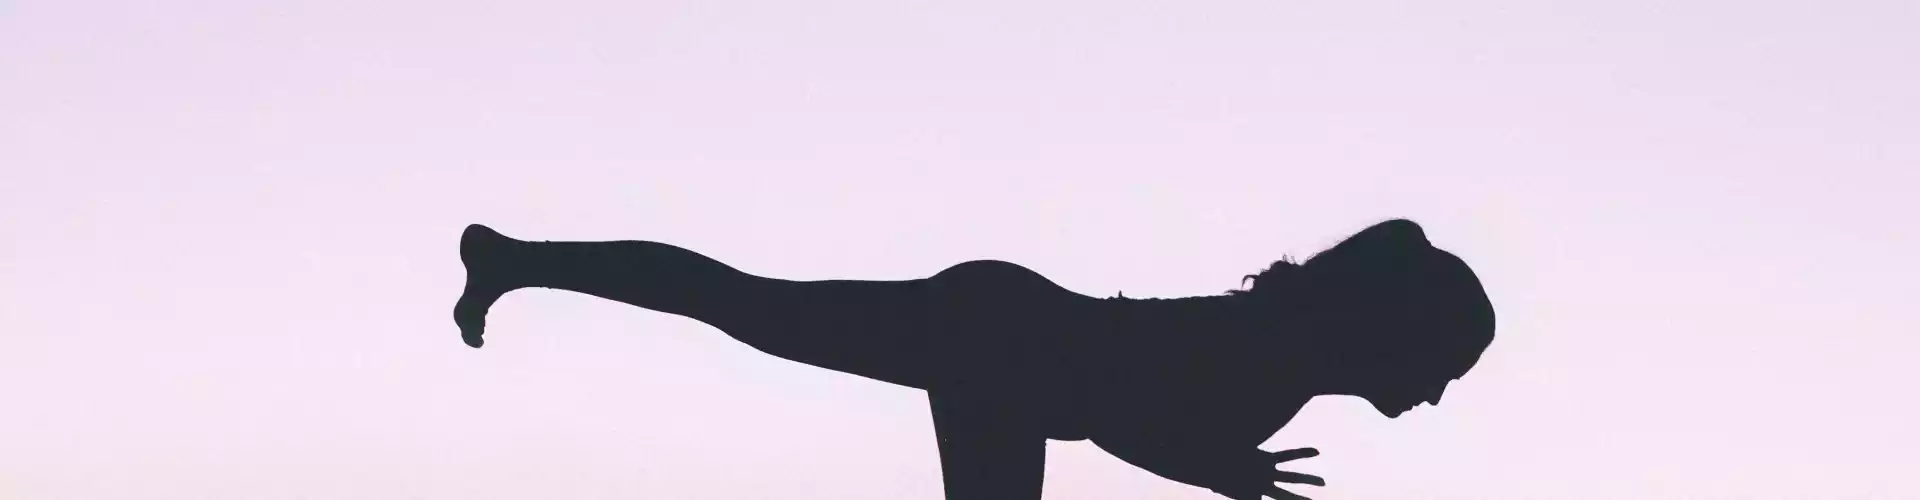 Hridaya Yoga